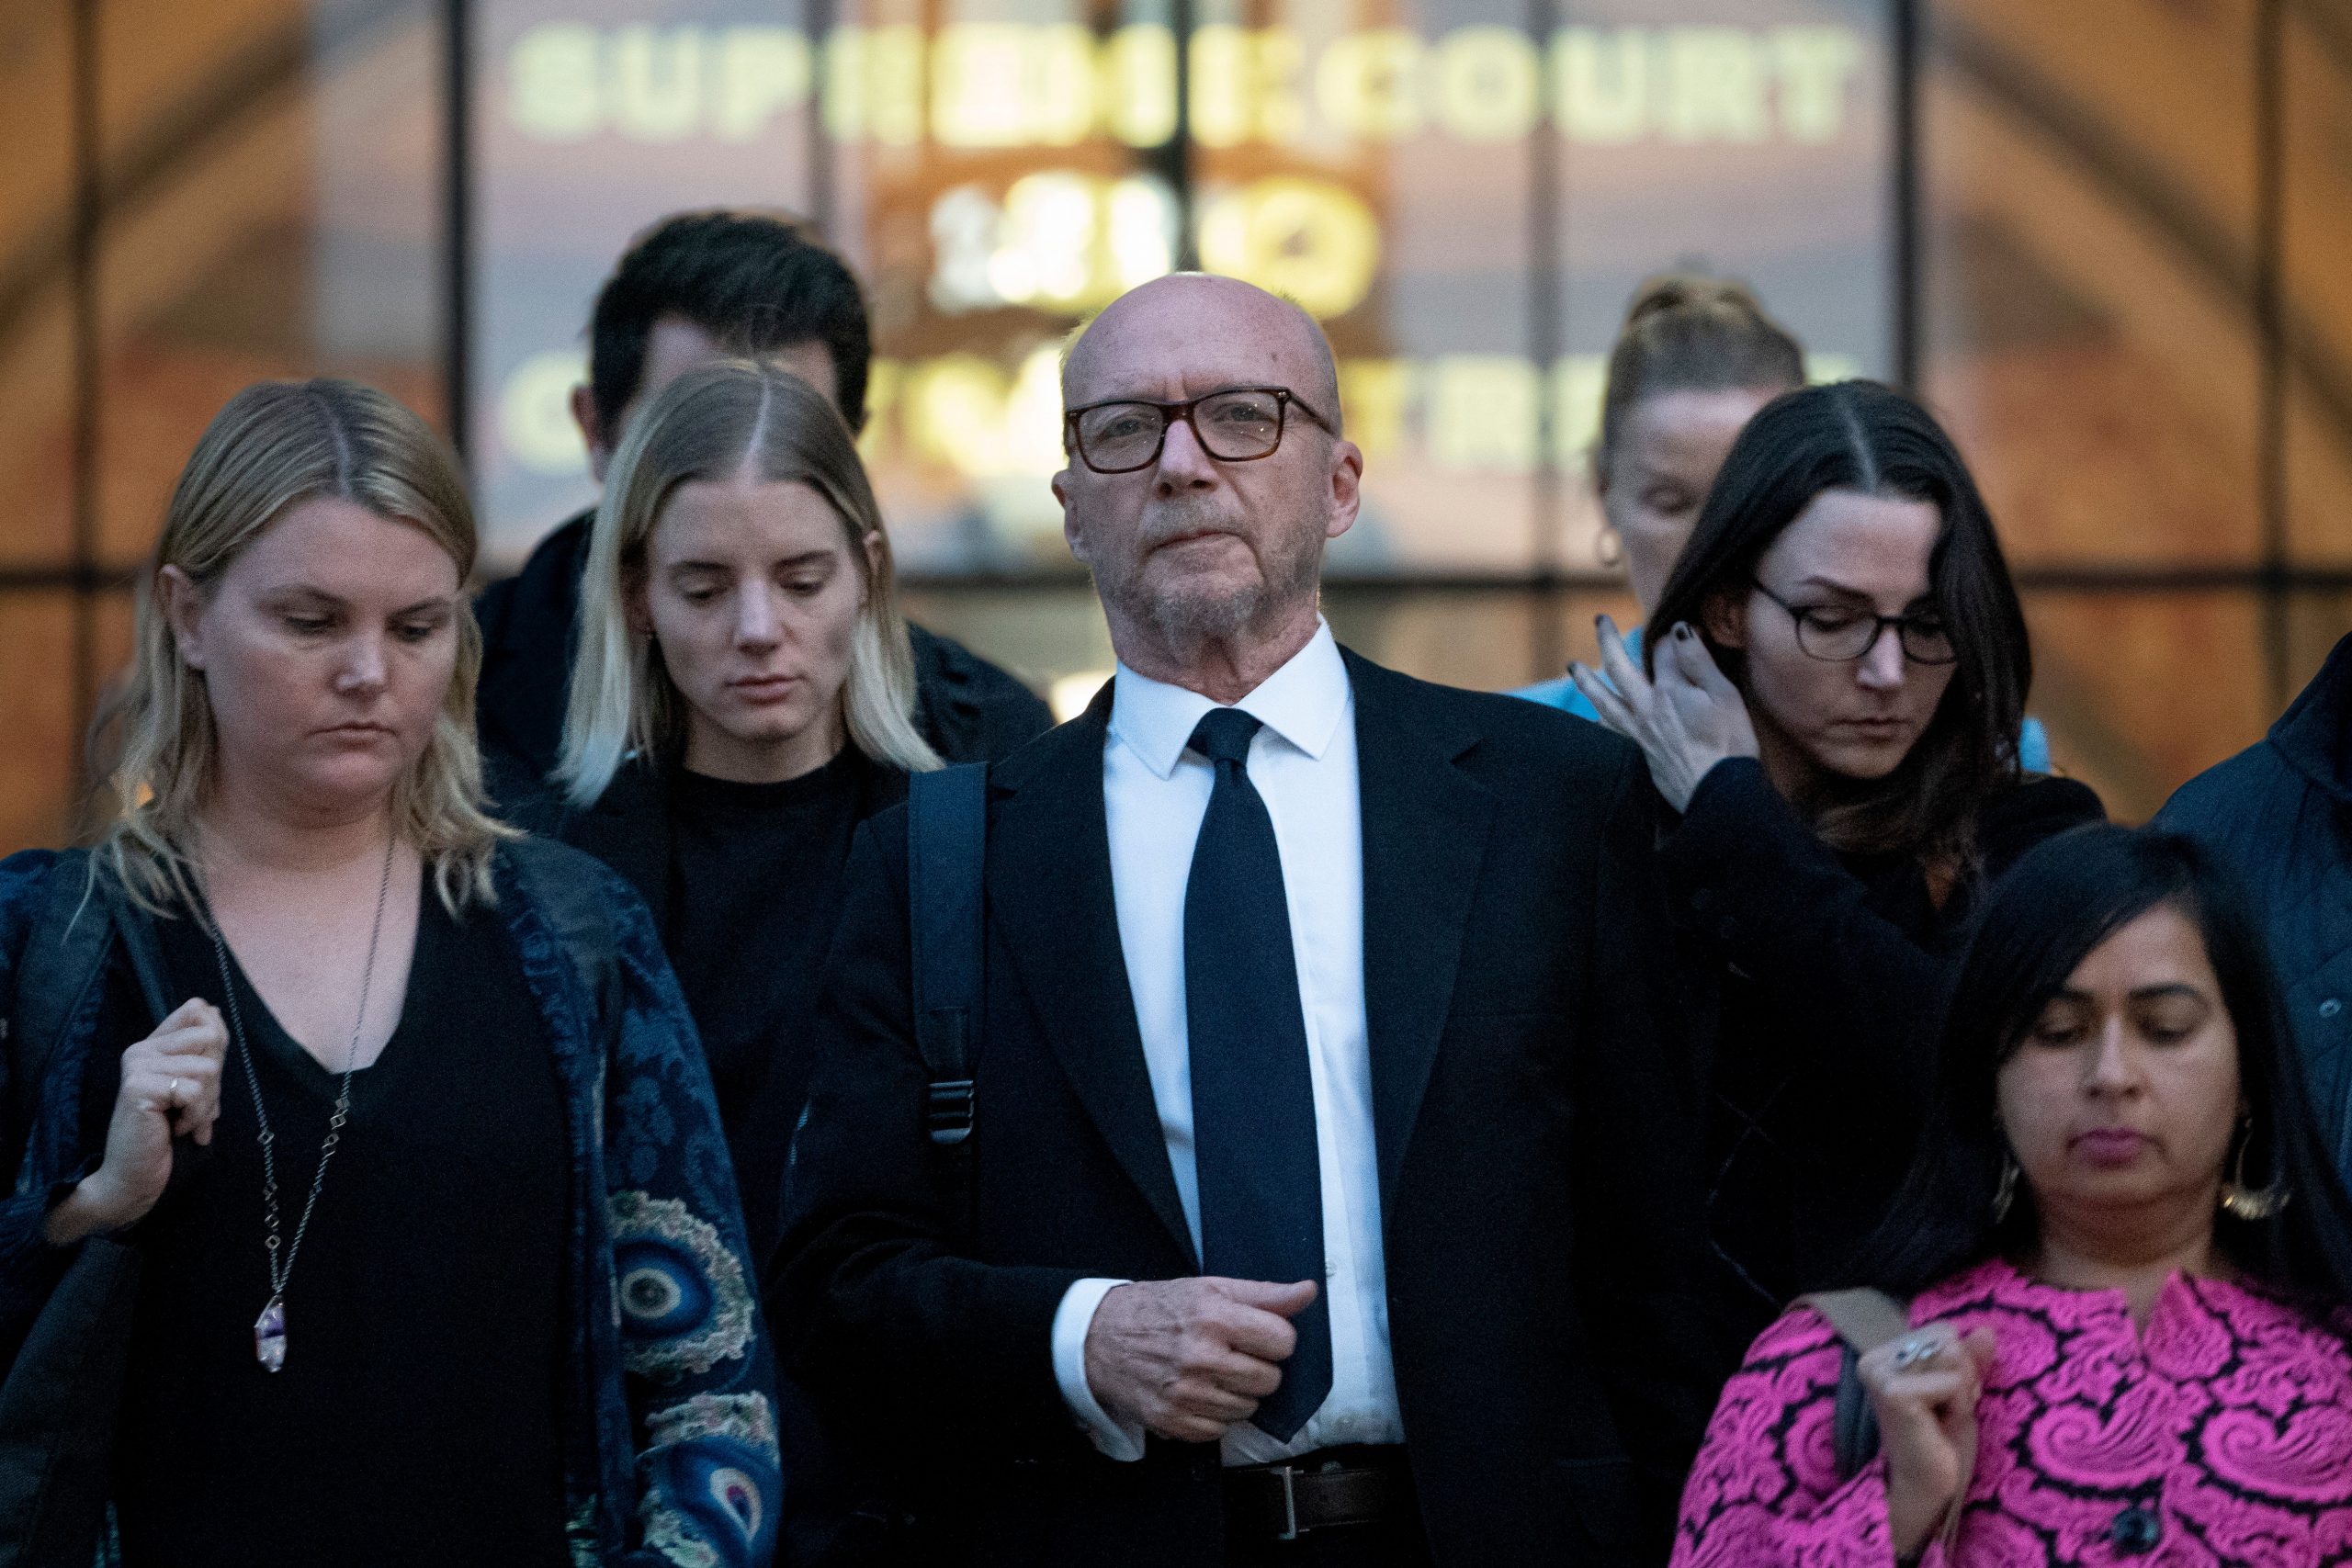 Filmmaker Paul Haggis ordered to pay $10M by jury in rape lawsuit